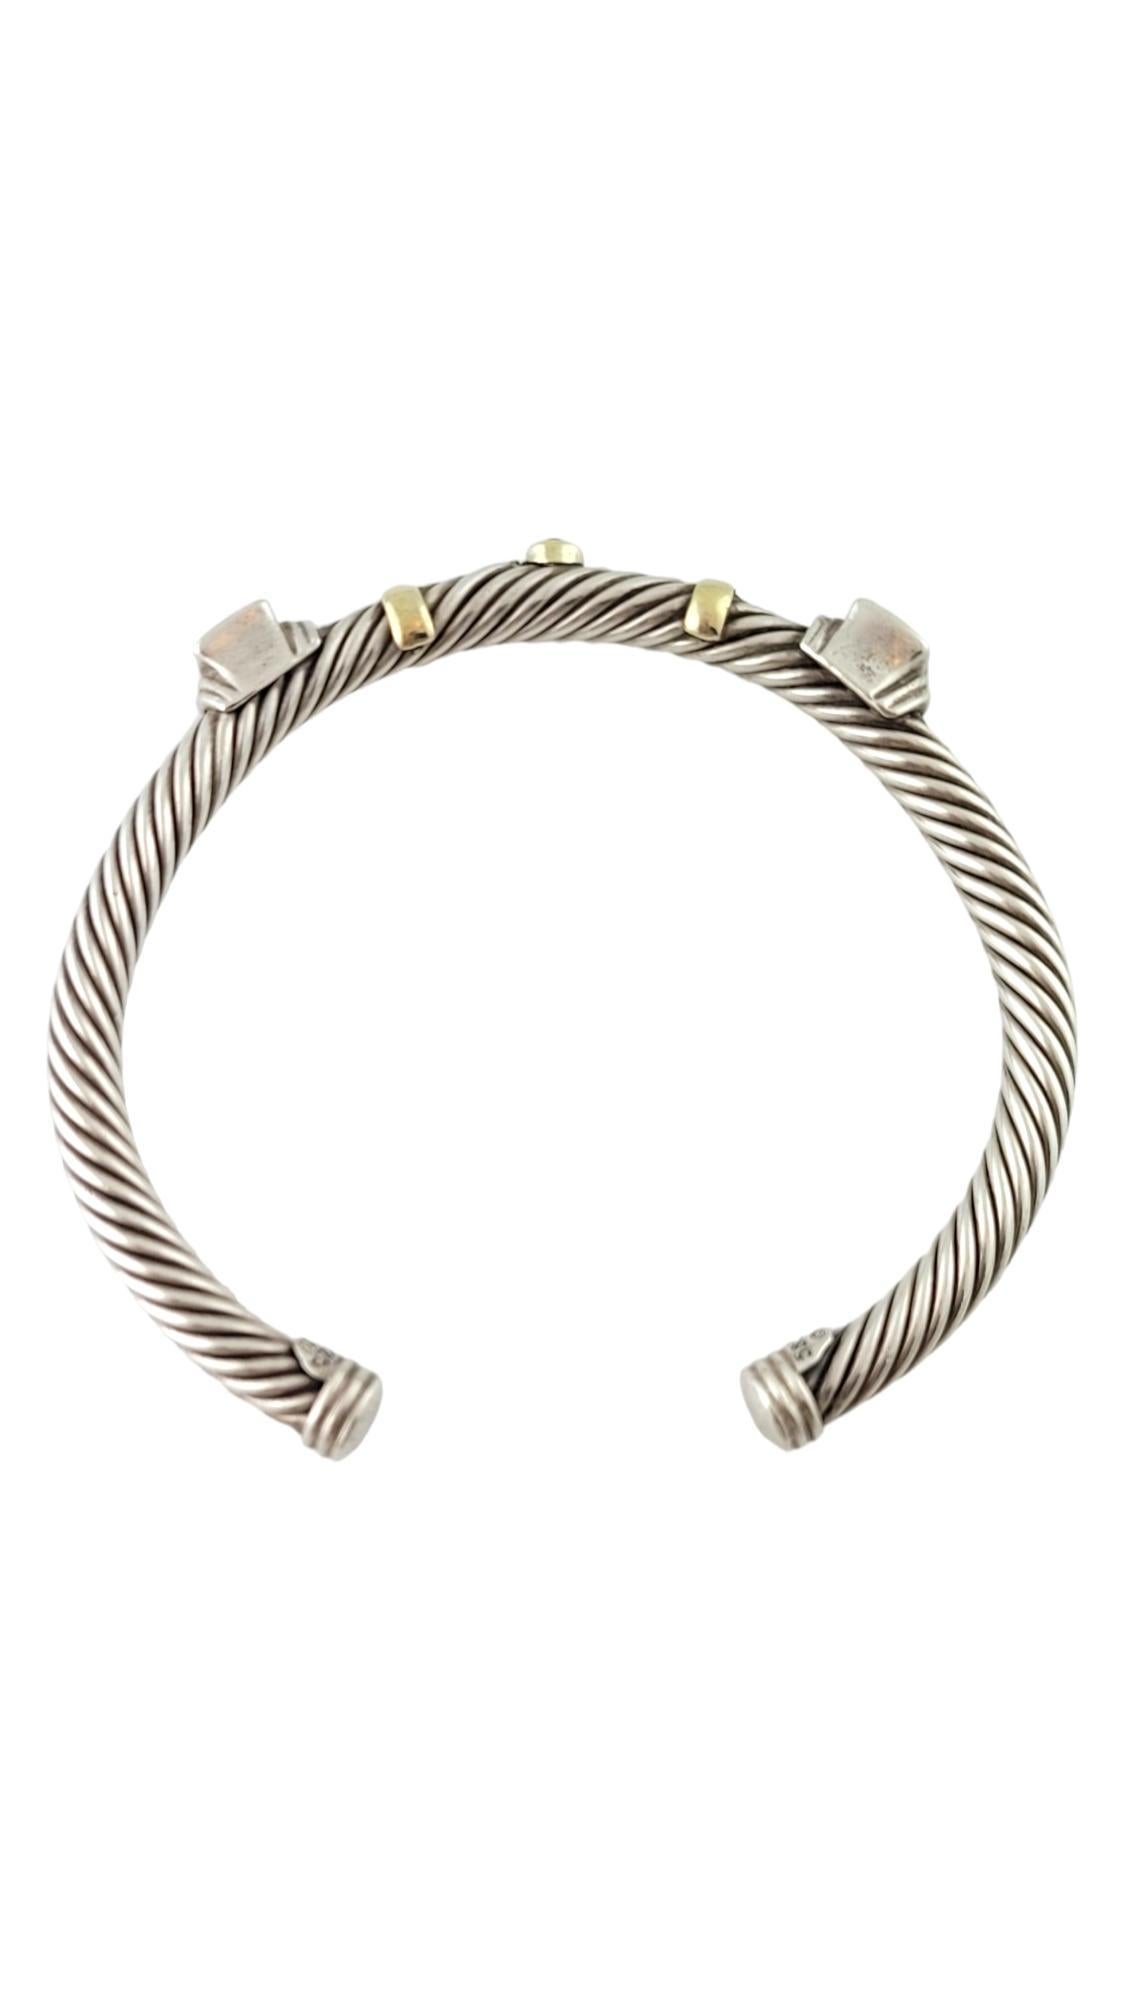 Square Cut David Yurman 14K Yellow Gold & Sterling Silver Renaissance Cable Bracelet #17479